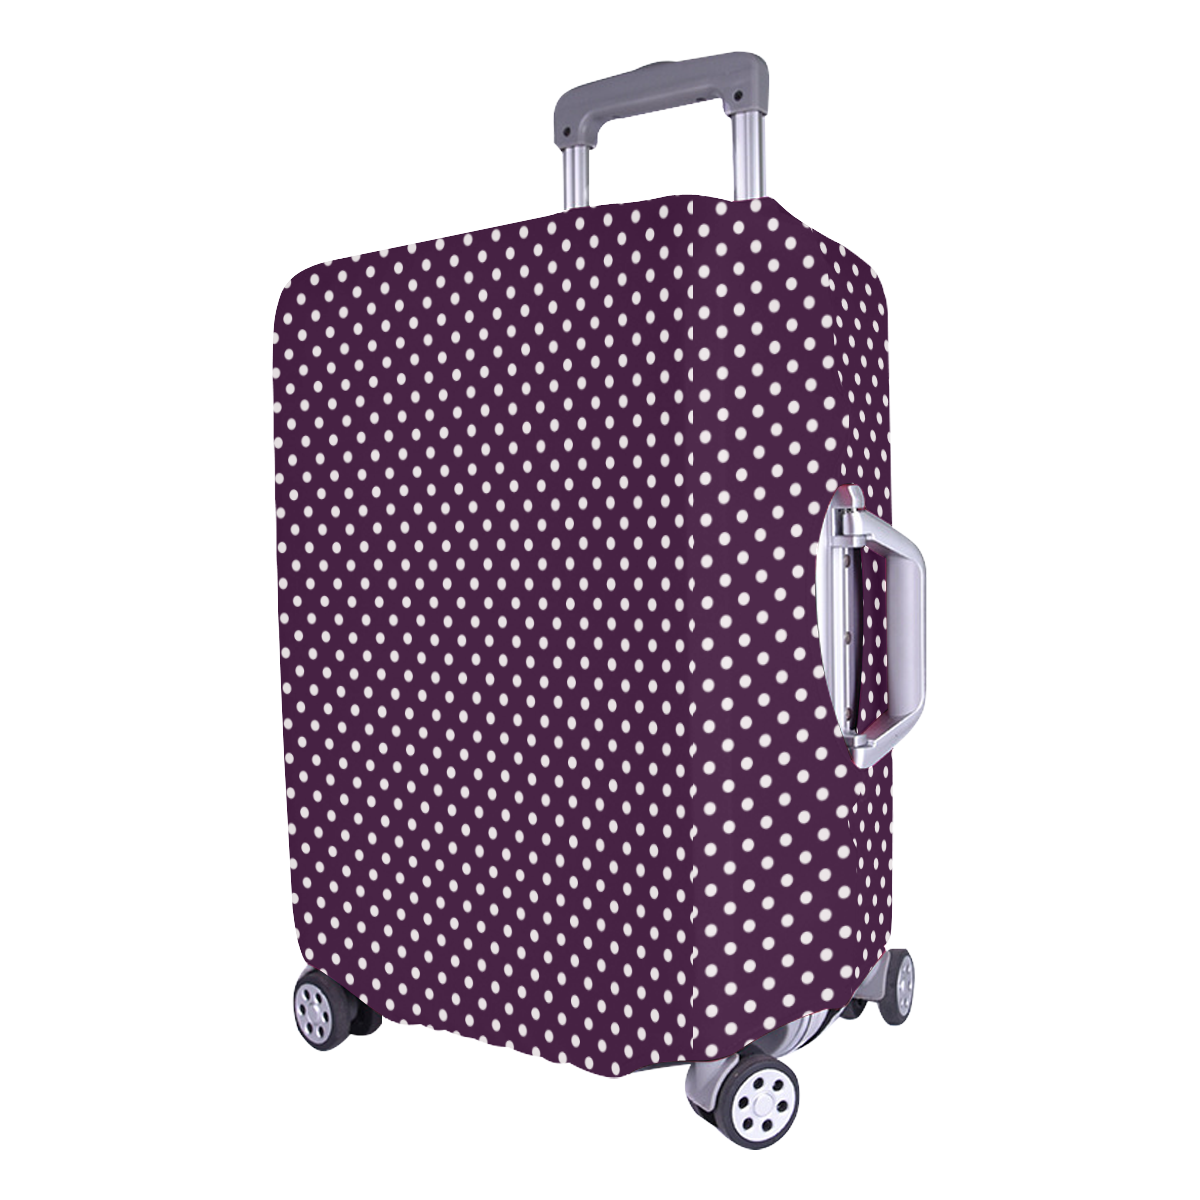 Burgundy polka dots Luggage Cover/Large 26"-28"